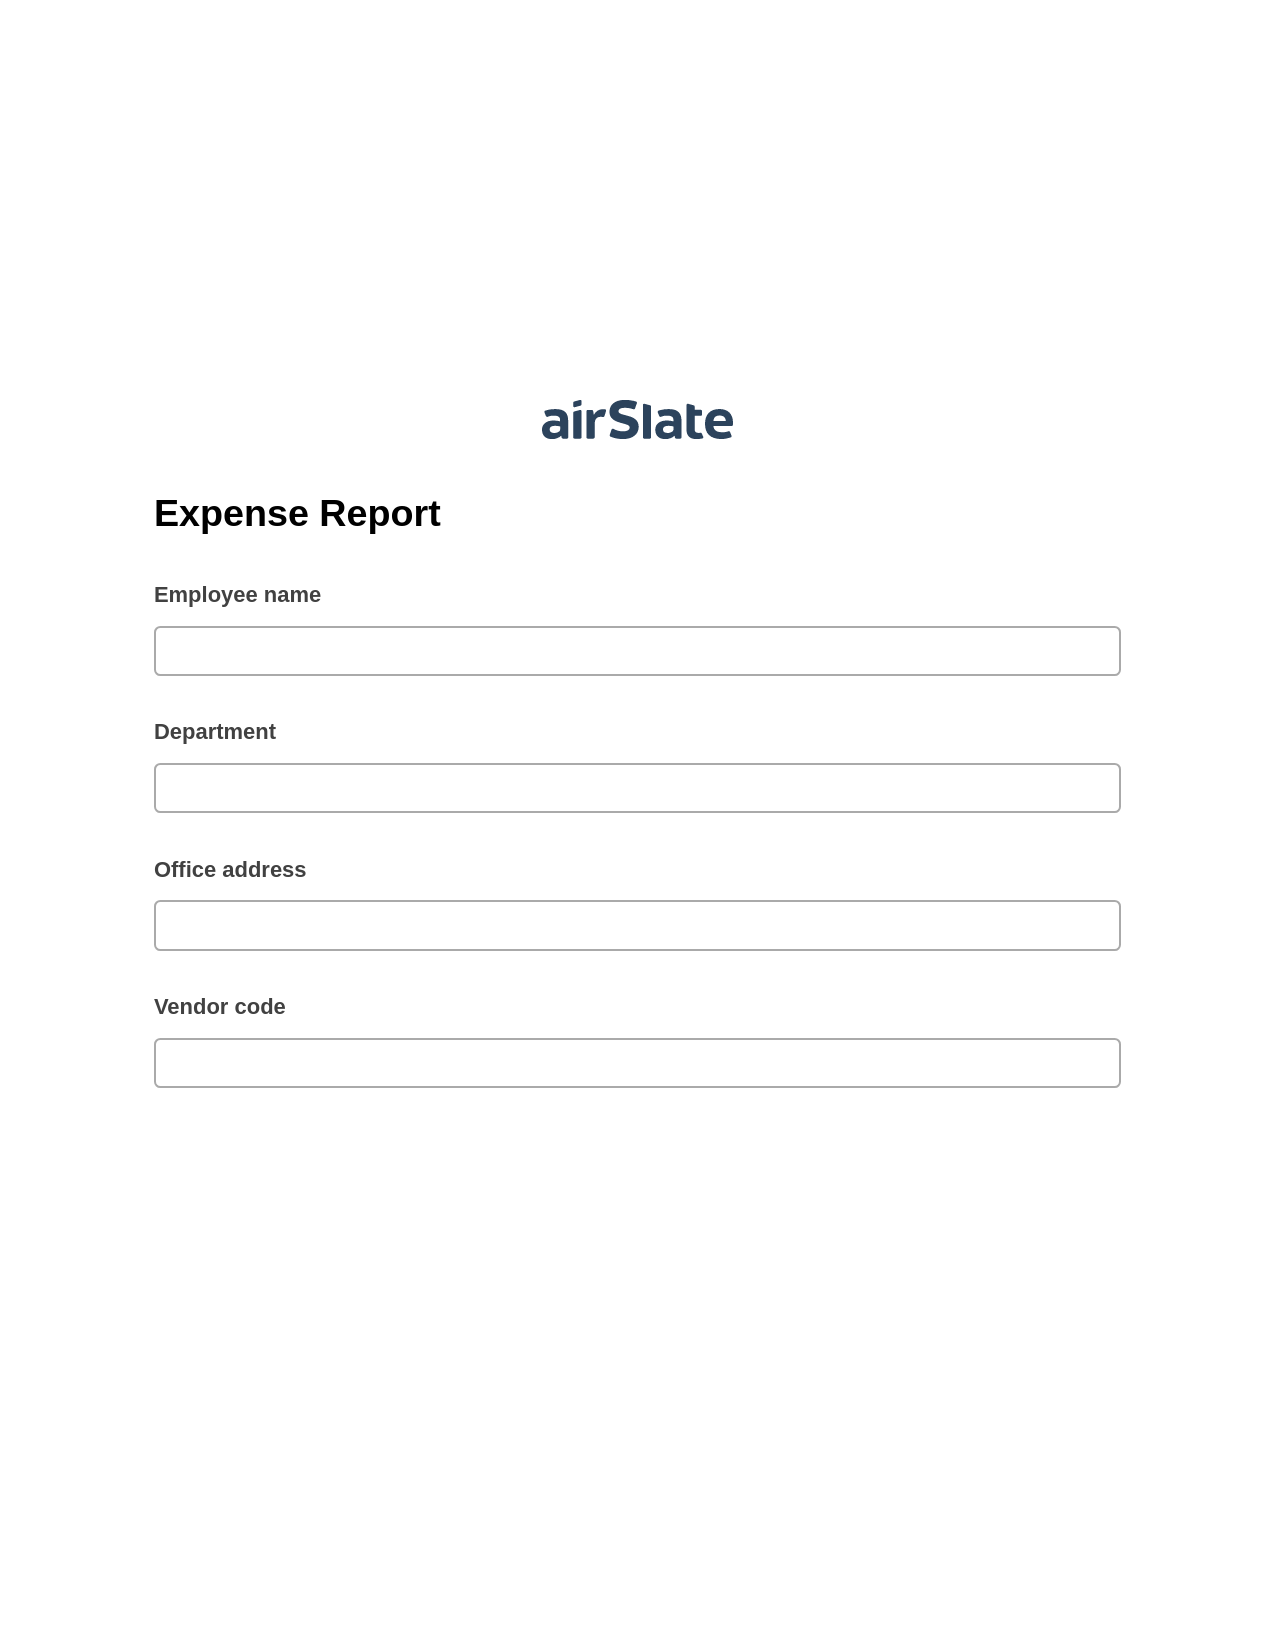 Expense Report Pre-fill from Google Sheets Bot, Slack Notification Bot, Webhook Postfinish Bot